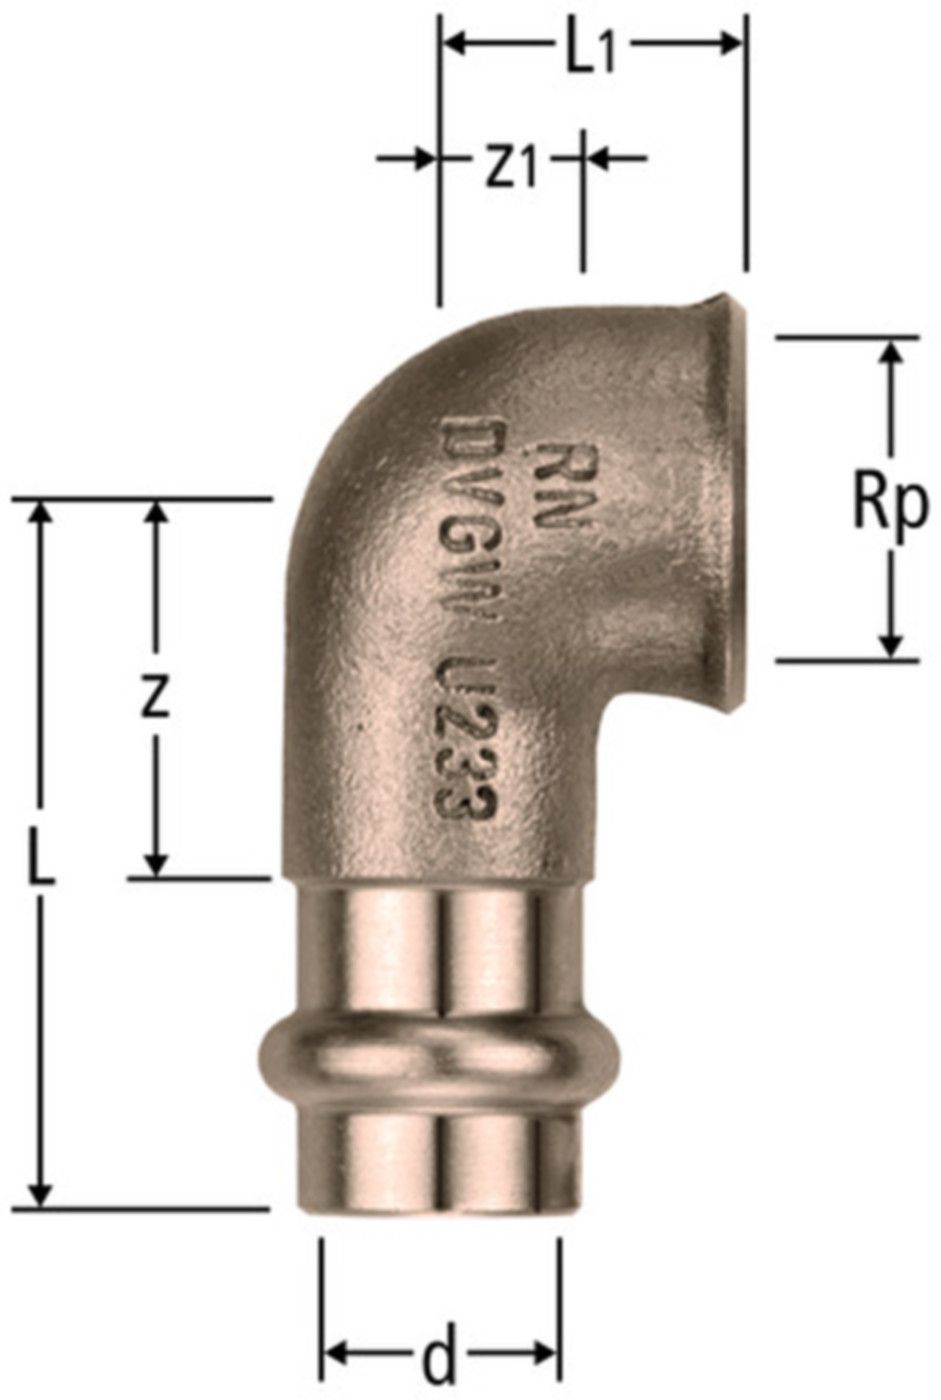 Winkel mit IG 22 x 1" 81006.33 - Nussbaum-Optipress-Rotguss-Fittings